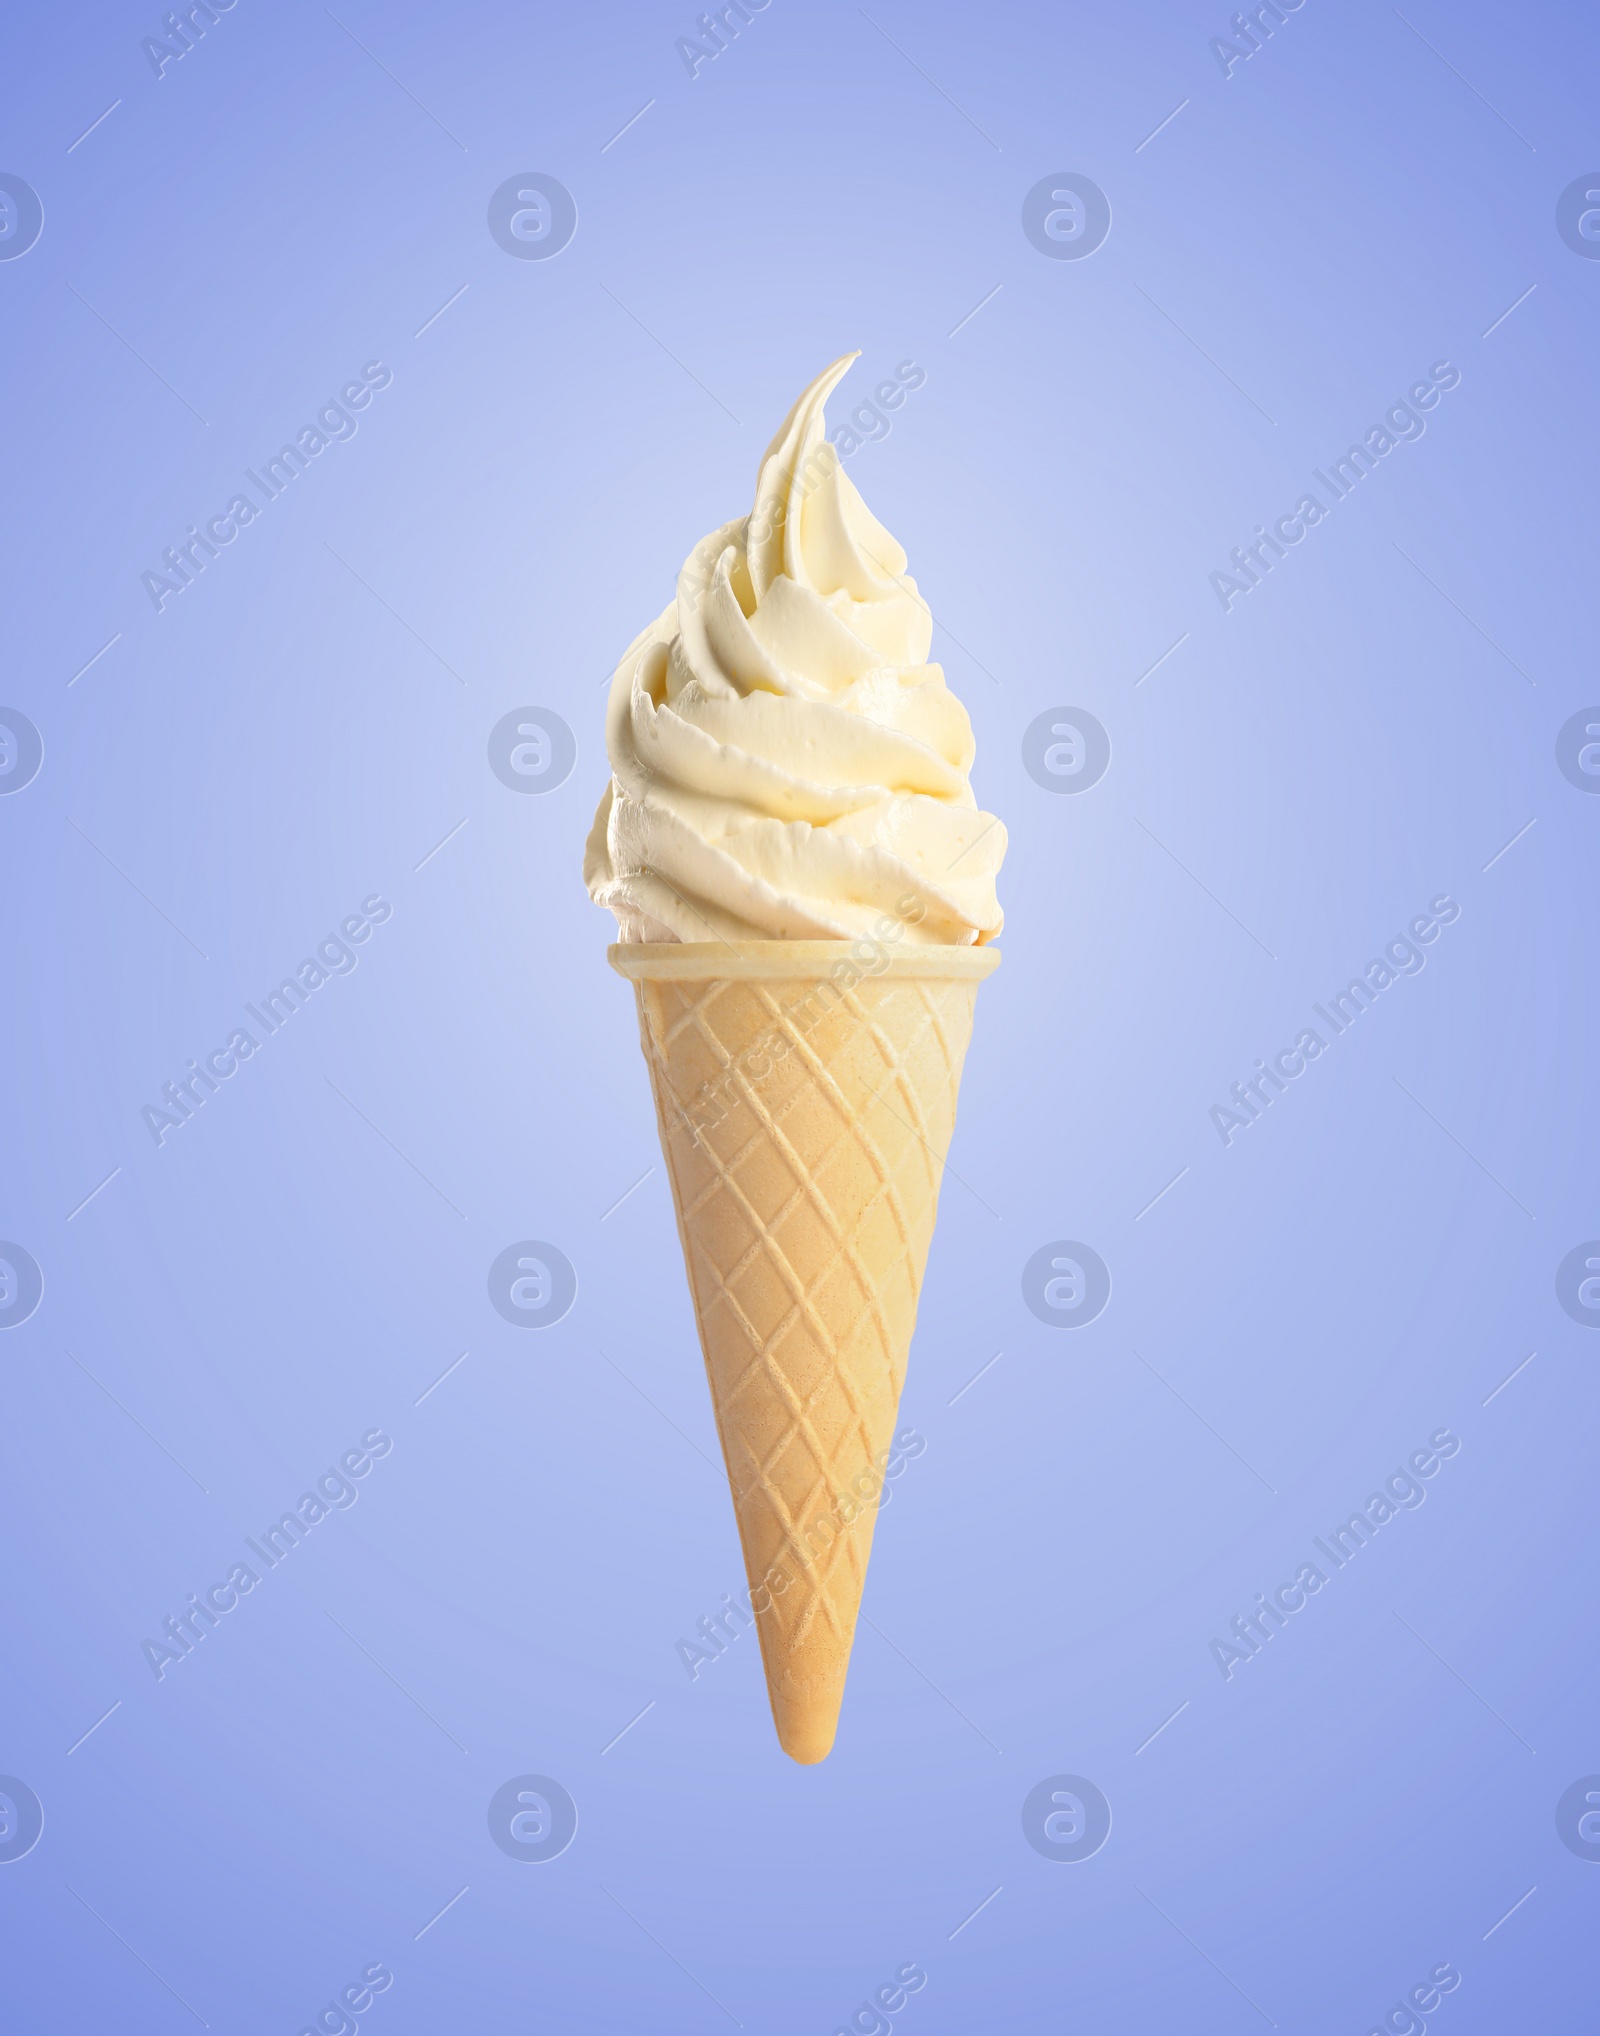 Image of Tasty vanilla ice cream in waffle cone on pastel blue background. Soft serve